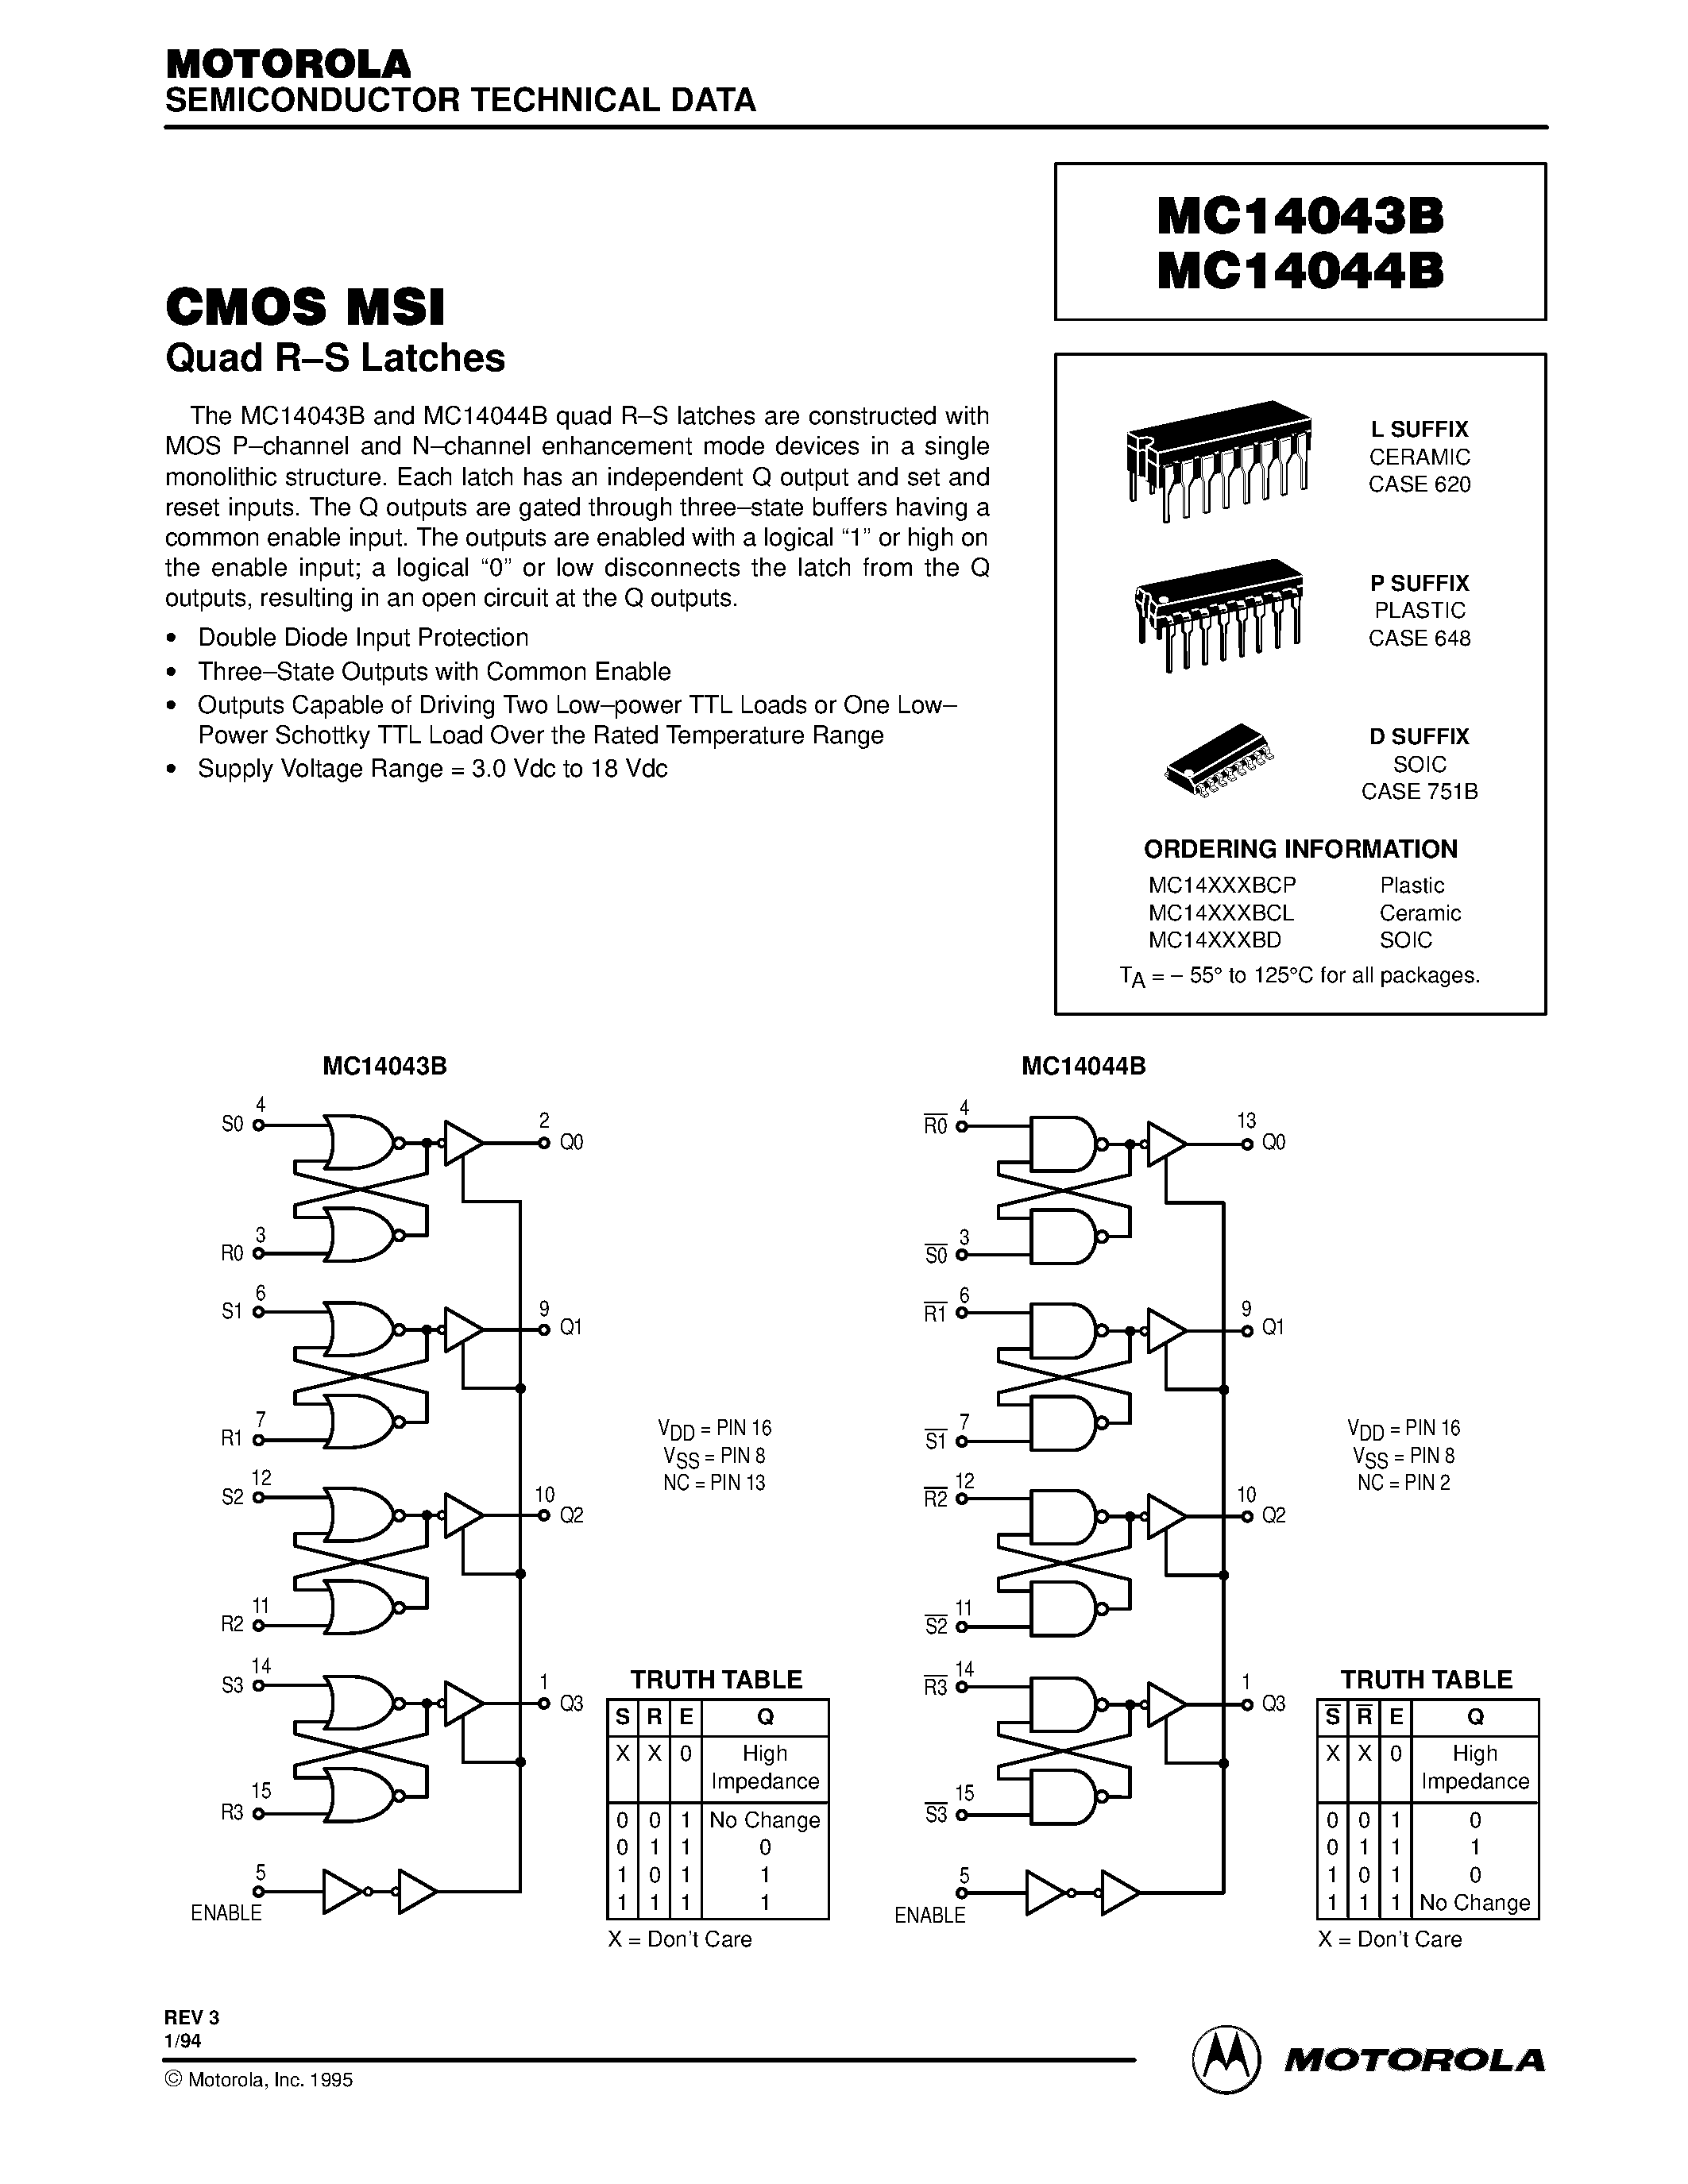 Datasheet MC14044BCP - CMOS MSI Quad R-S Latches page 1